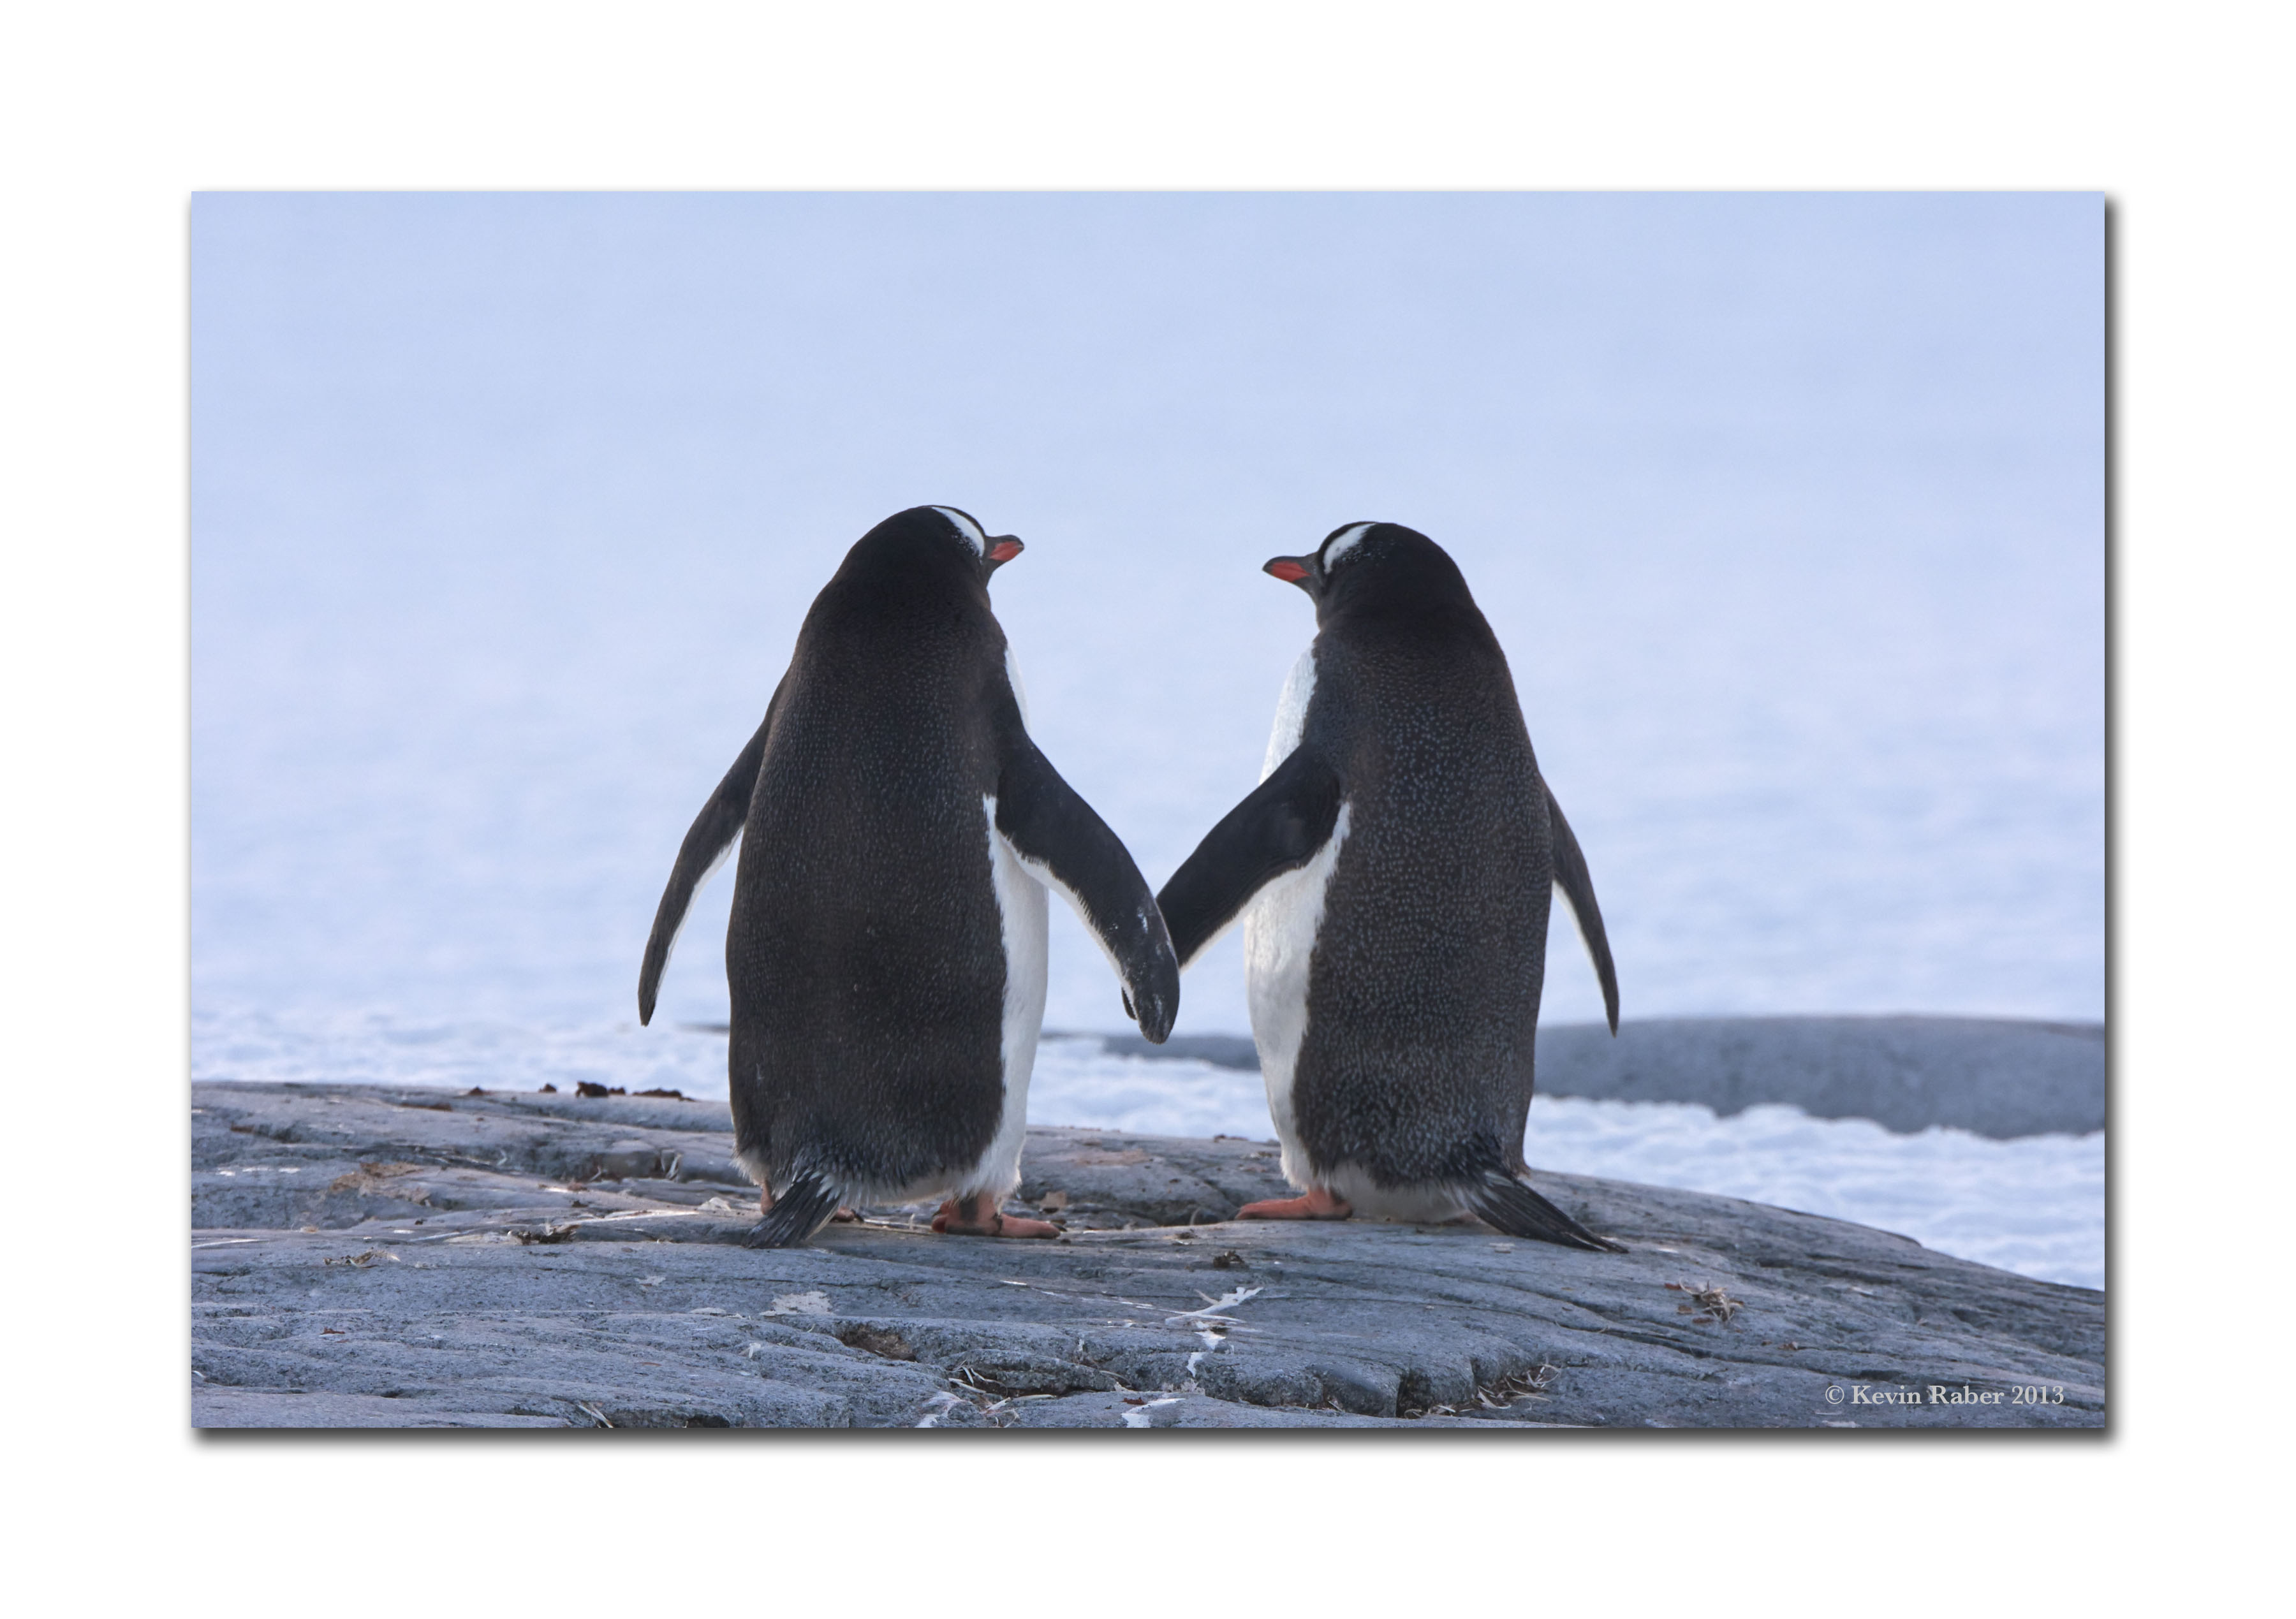 Penguin Love, Antarctica November 2013